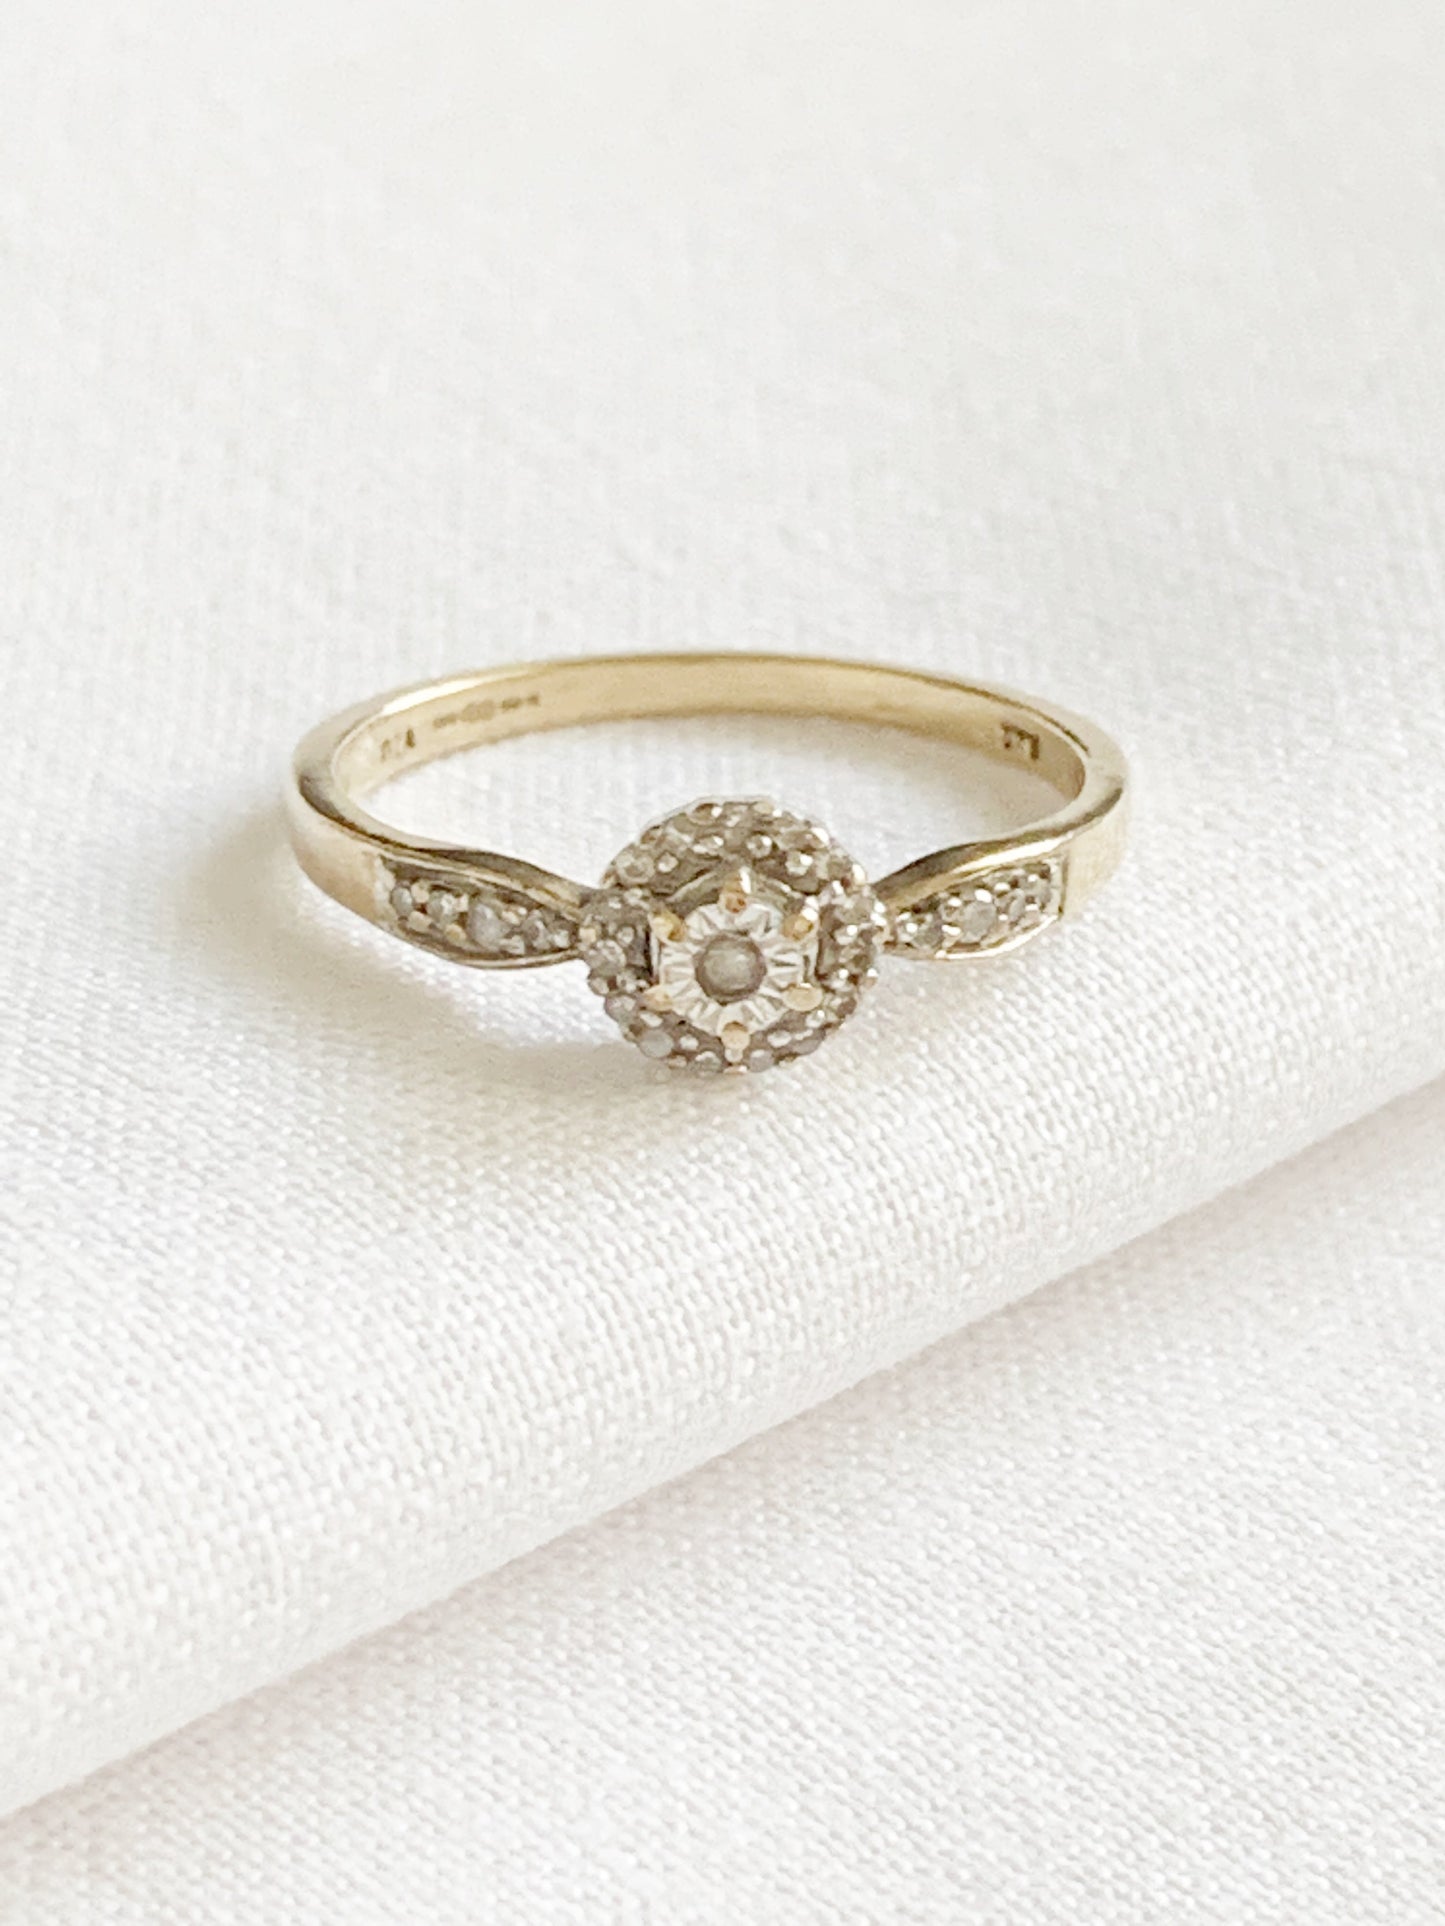 Vintage Art Deco Style 9ct Gold Diamond Engagement Ring